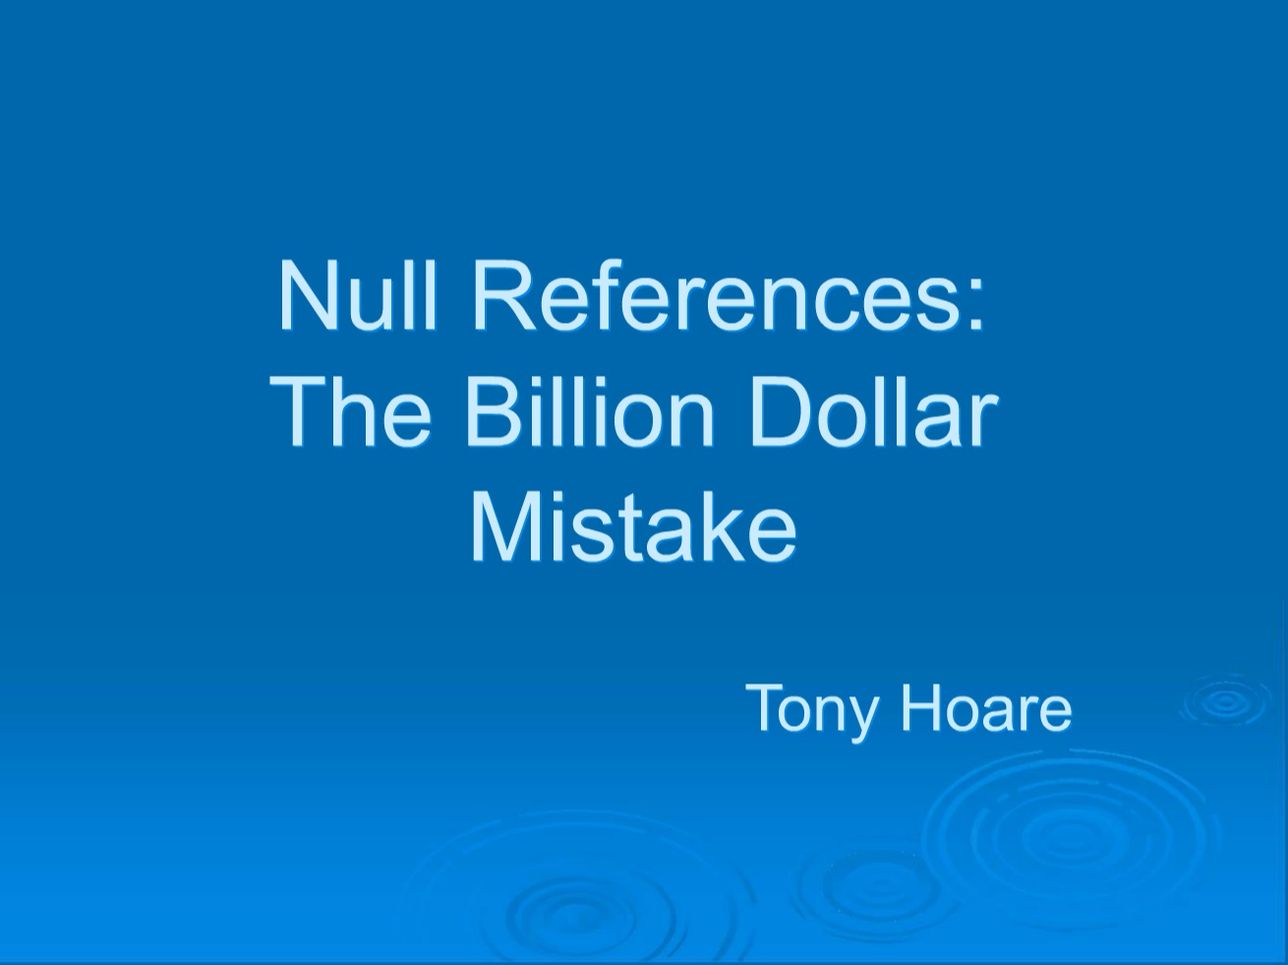 https://imgopt.infoq.com/fit-in/1288x0/filters:quality(80)/presentations/Null-References-The-Billion-Dollar-Mistake-Tony-Hoare/en/slides/slide0.jpg